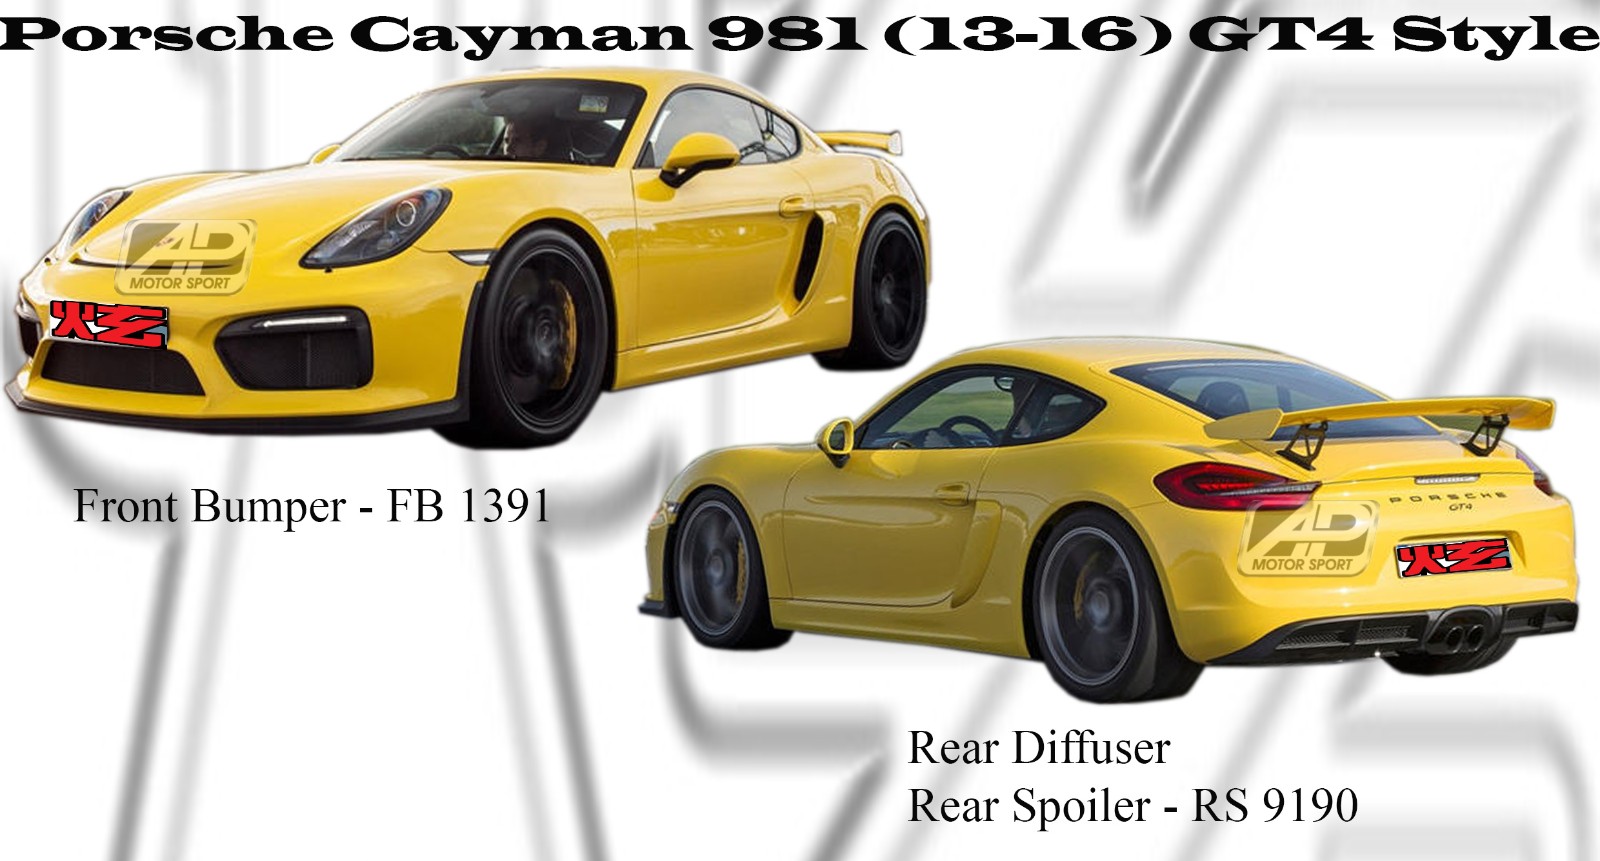 Porsche Cayman 981 2013-2016 Front Bumper, Rear Diffuser, Re